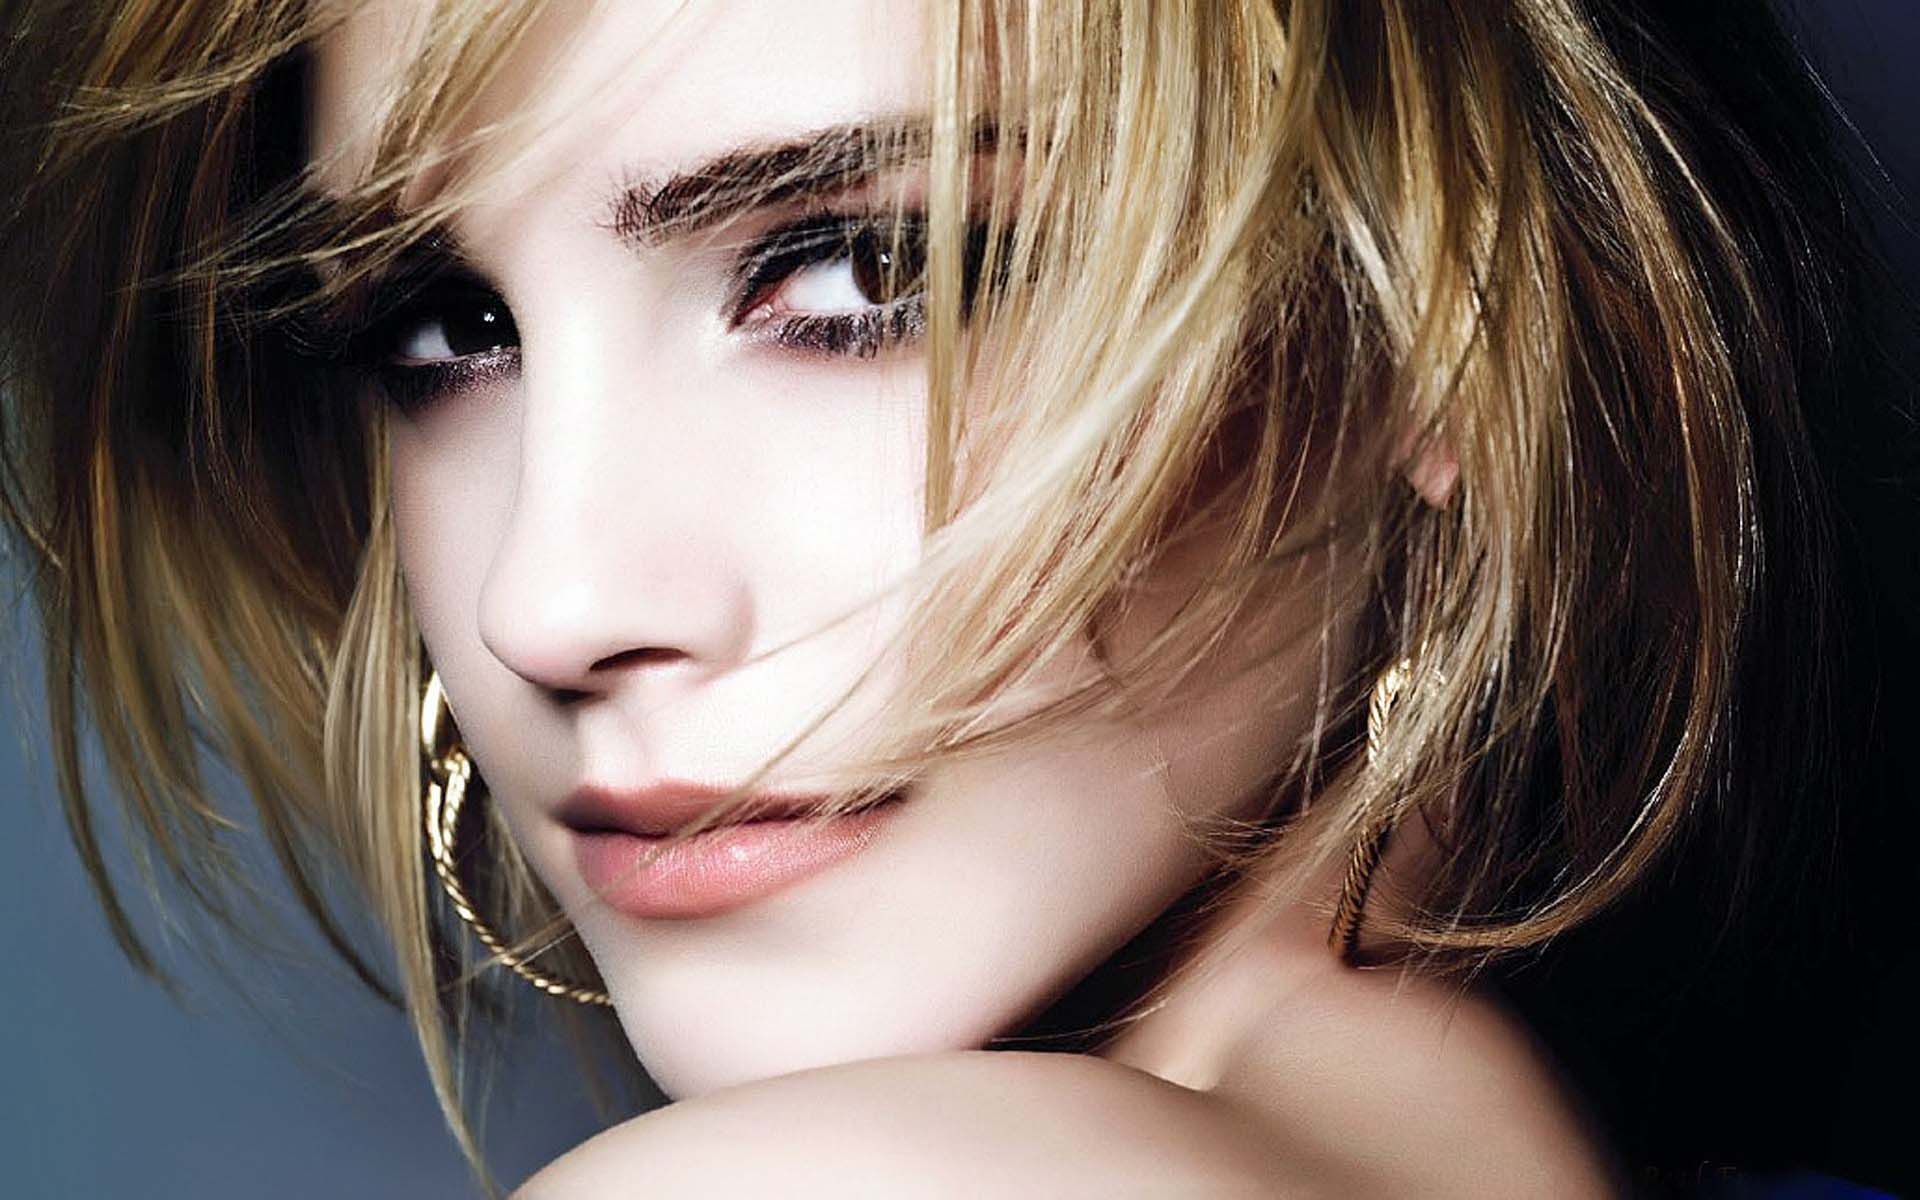 Emma Watson Wallpaper HD 2015 fashion | Wallpapers, Backgrounds ...